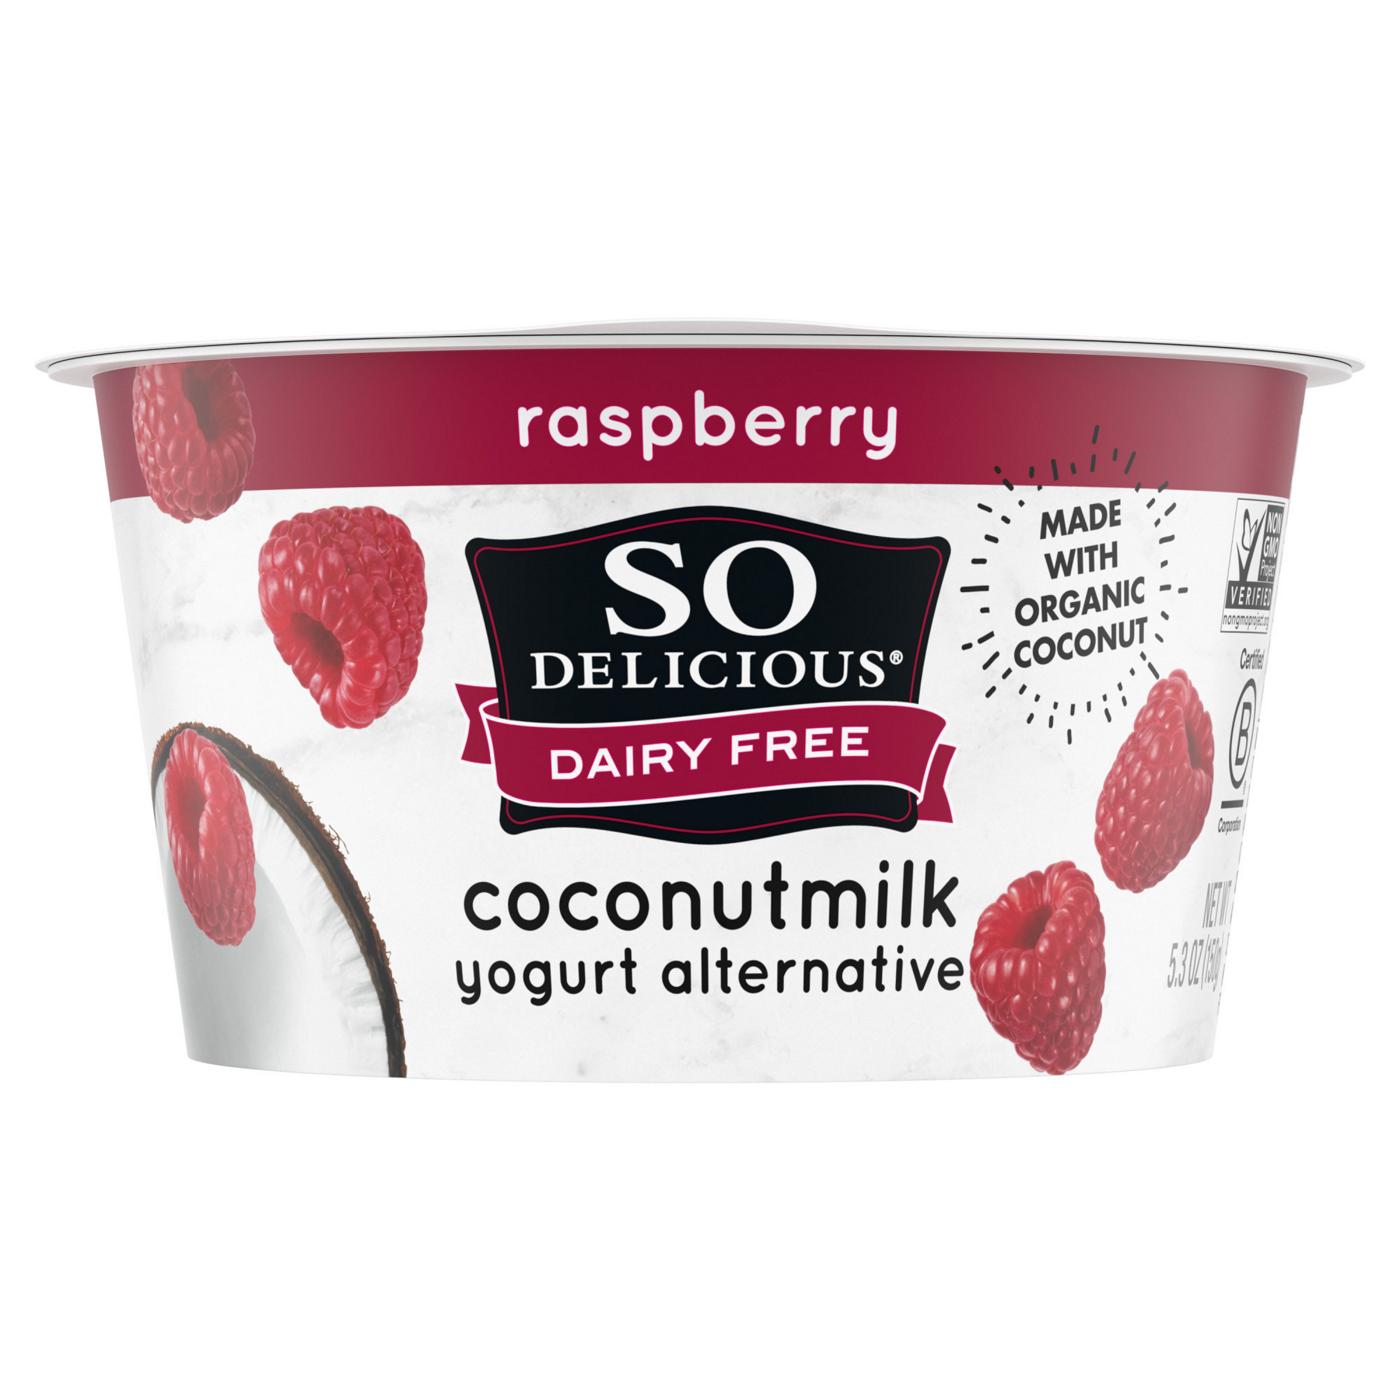 So Delicious Dairy Free Raspberry Coconutmilk Yogurt; image 7 of 8